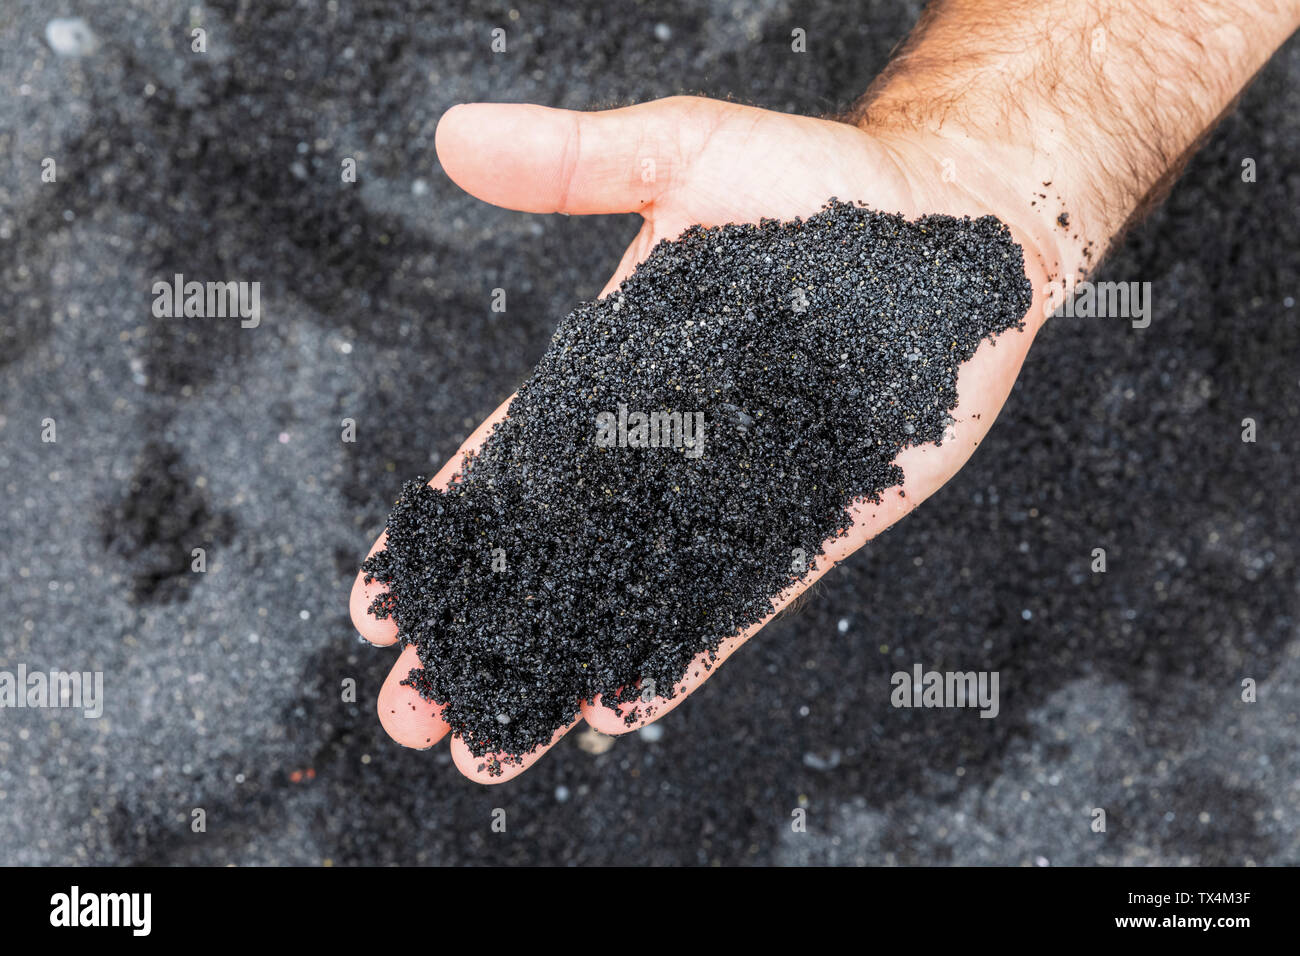 USA, Hawaii, Big Island, tenir la main de sable de lave noire Banque D'Images